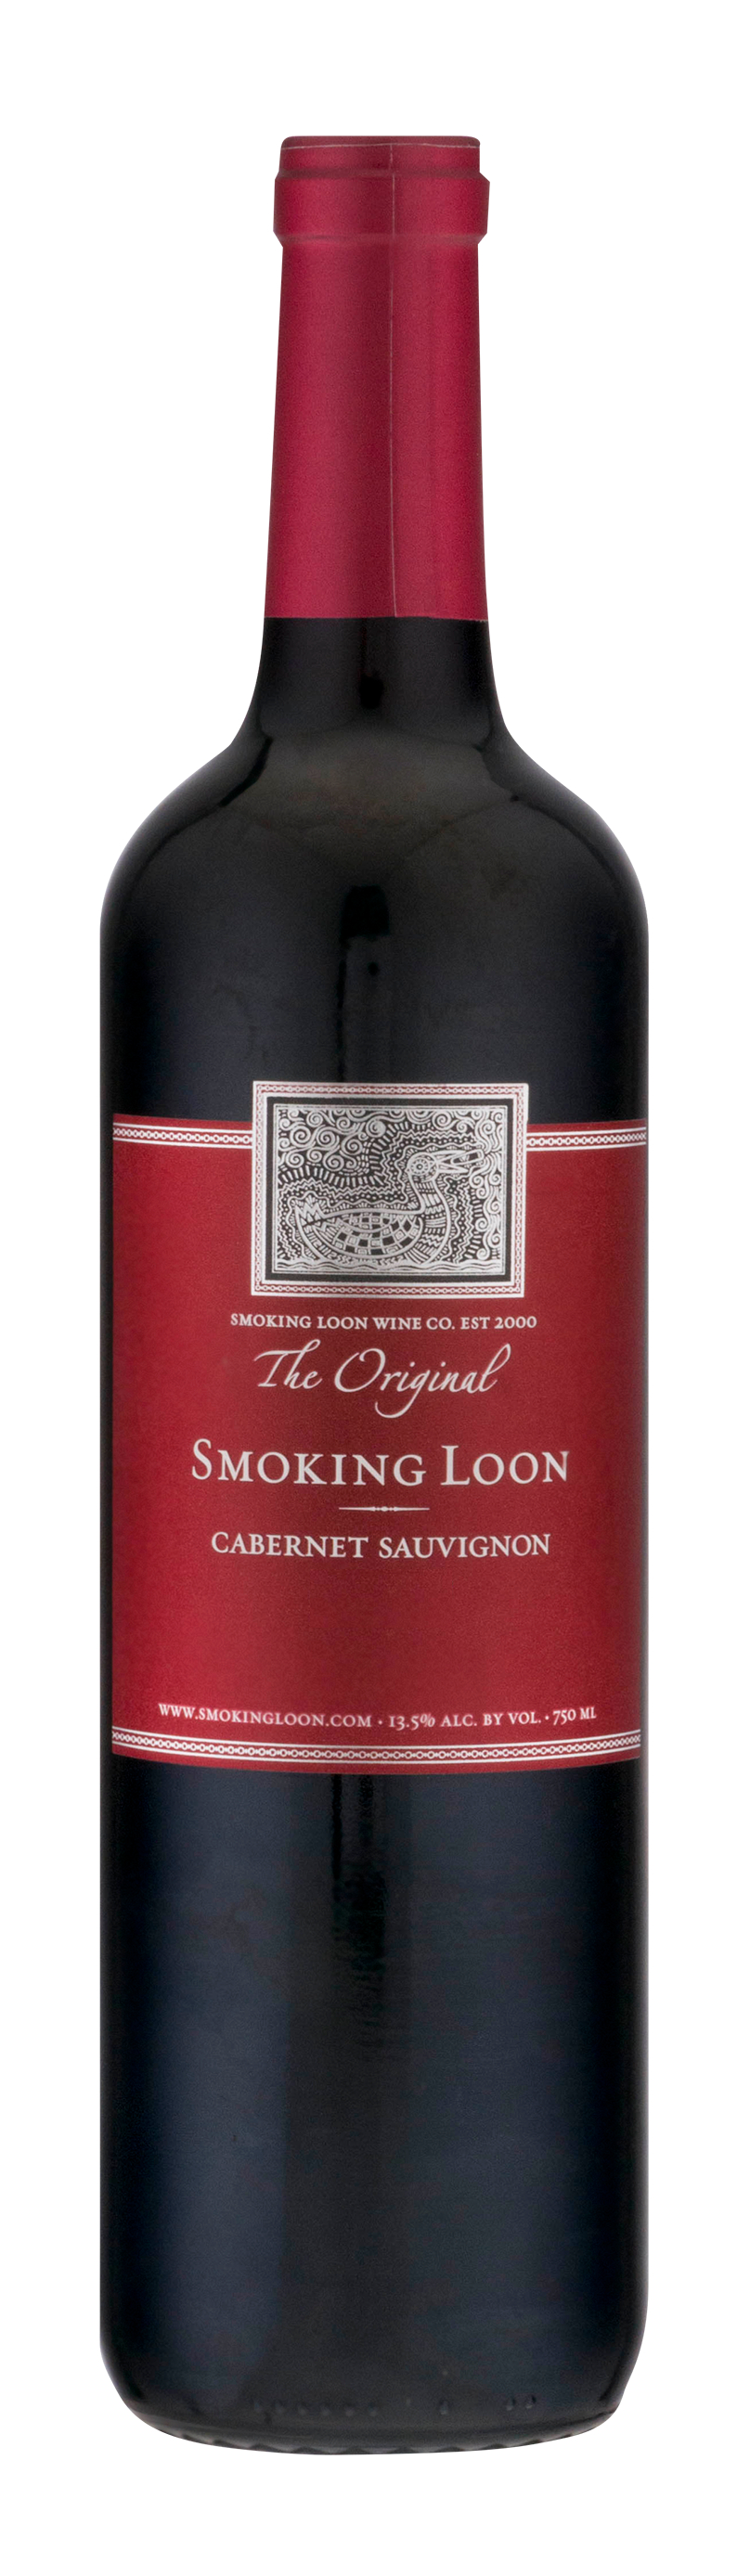 images/wine/Red Wine/Smoking Loon Cabernet Sauvignon .jpg